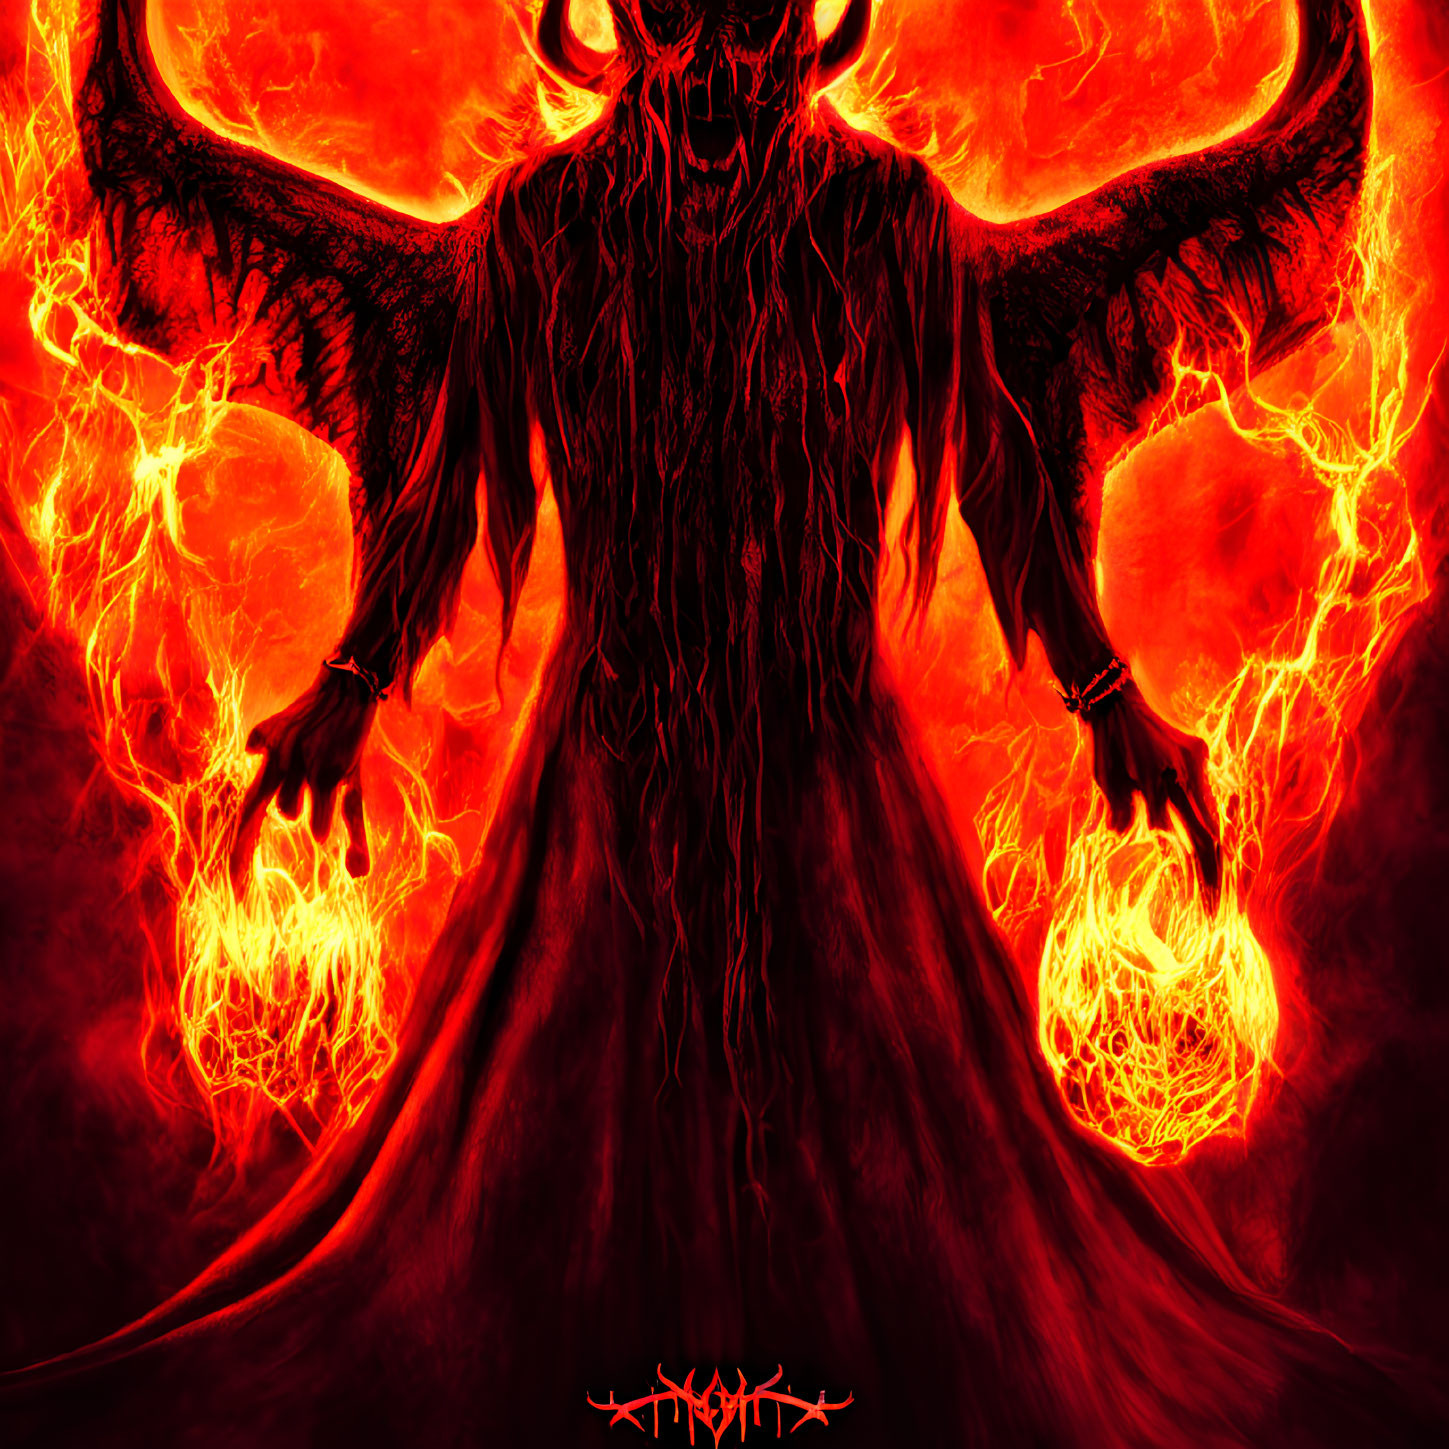 Sinister horned demonic figure with fiery orbs in infernal background